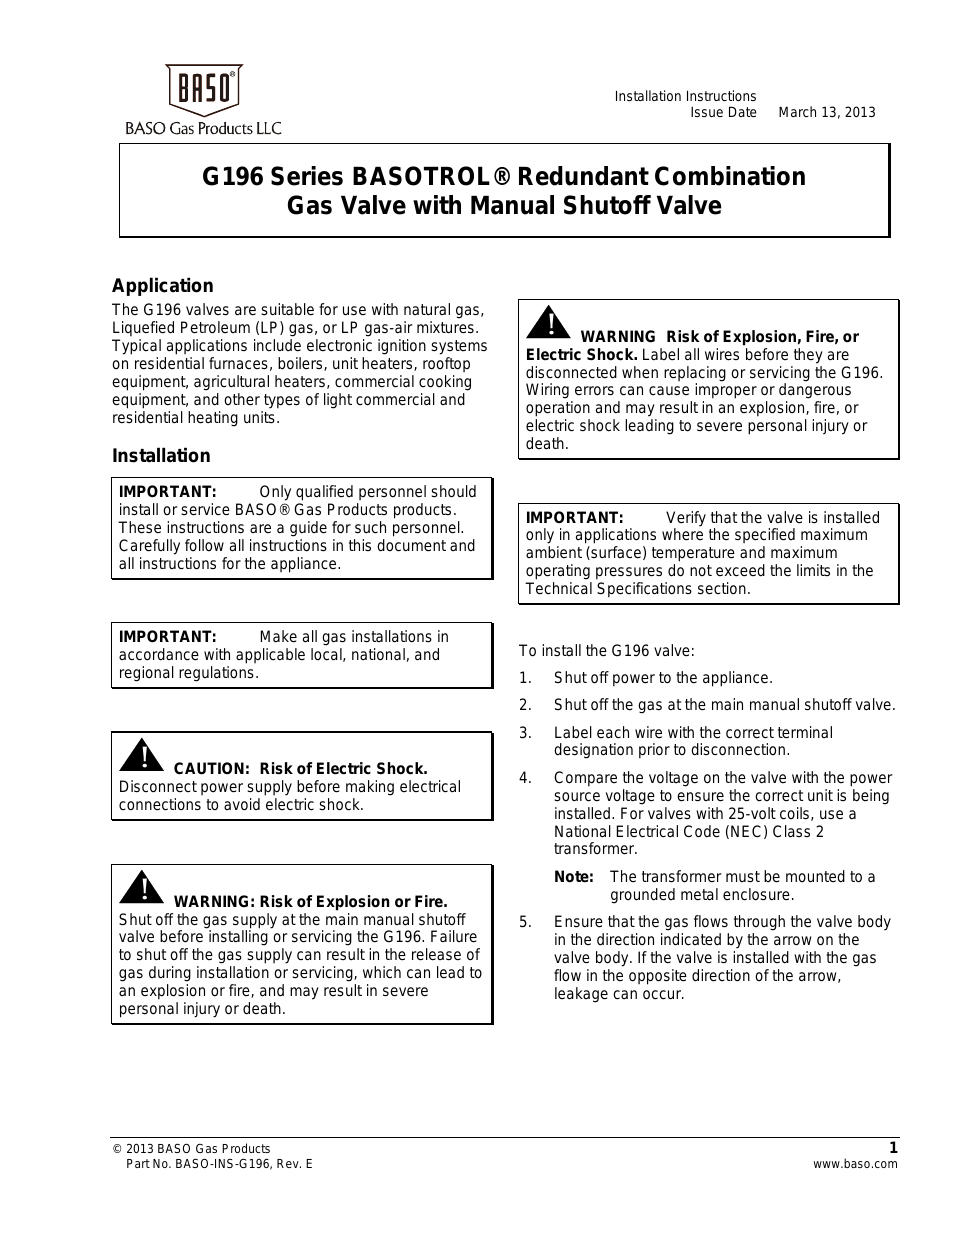 G196 Series BASOTROL Redundant Combination Gas Valve with Manual Shutoff Valve